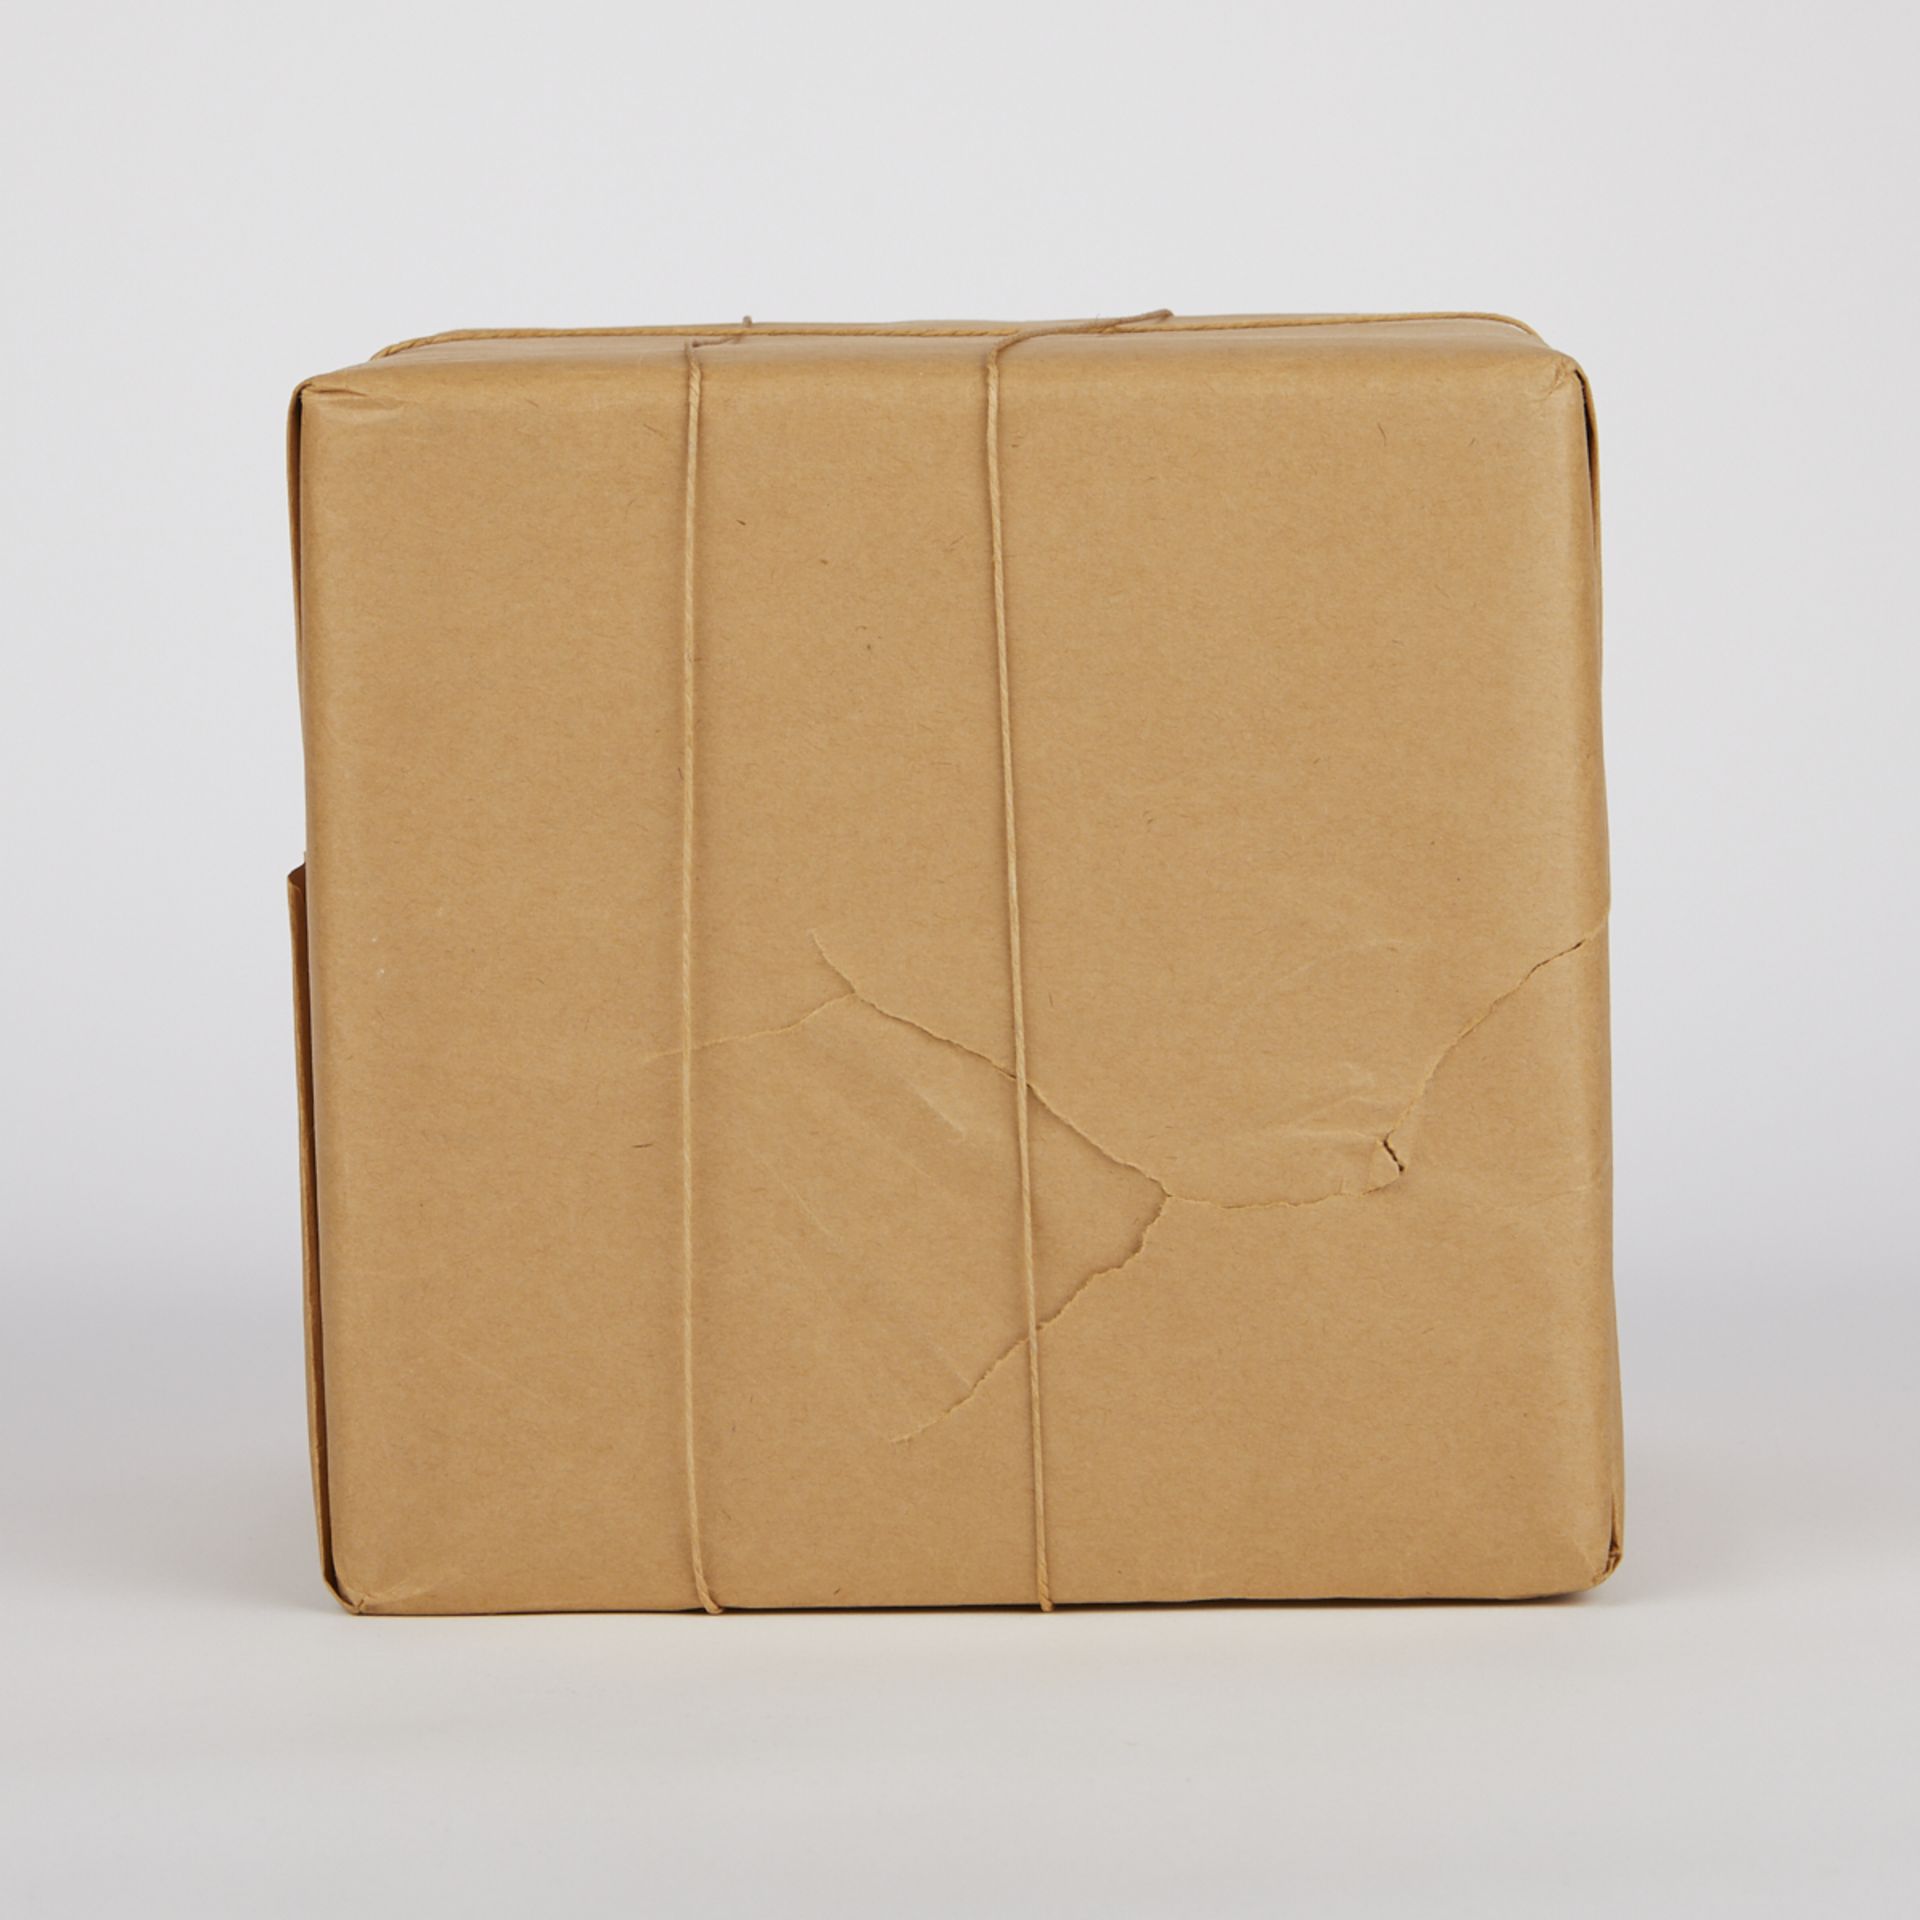 Christo "Wrapped Box" Sculpture 1966 - Bild 7 aus 10